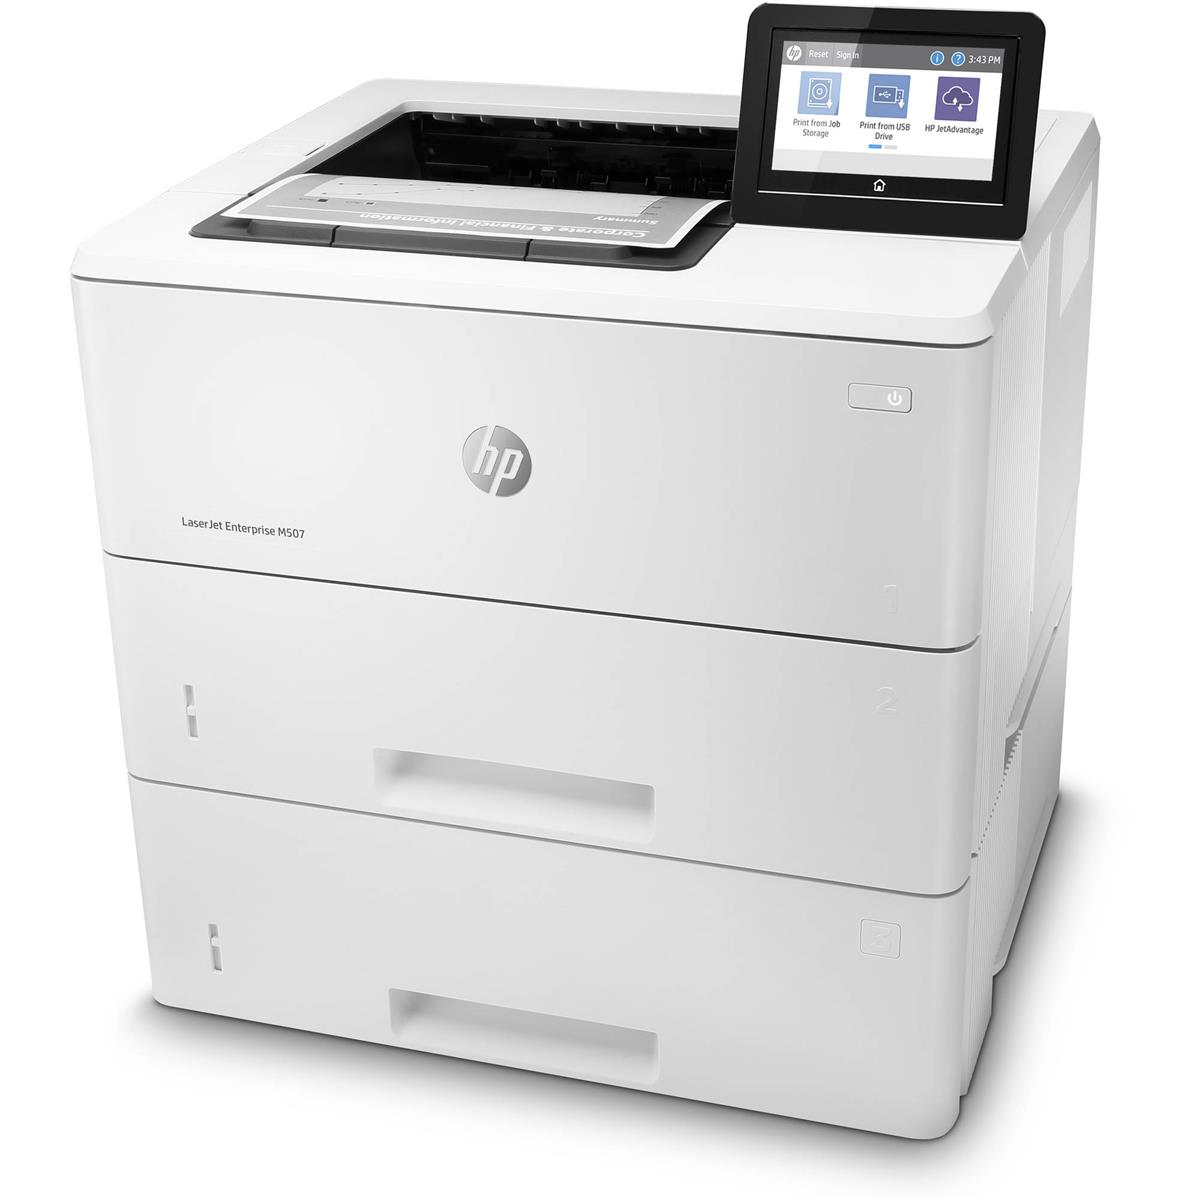 Image of HP LaserJet Enterprise M507x Monochrome Laser Printer